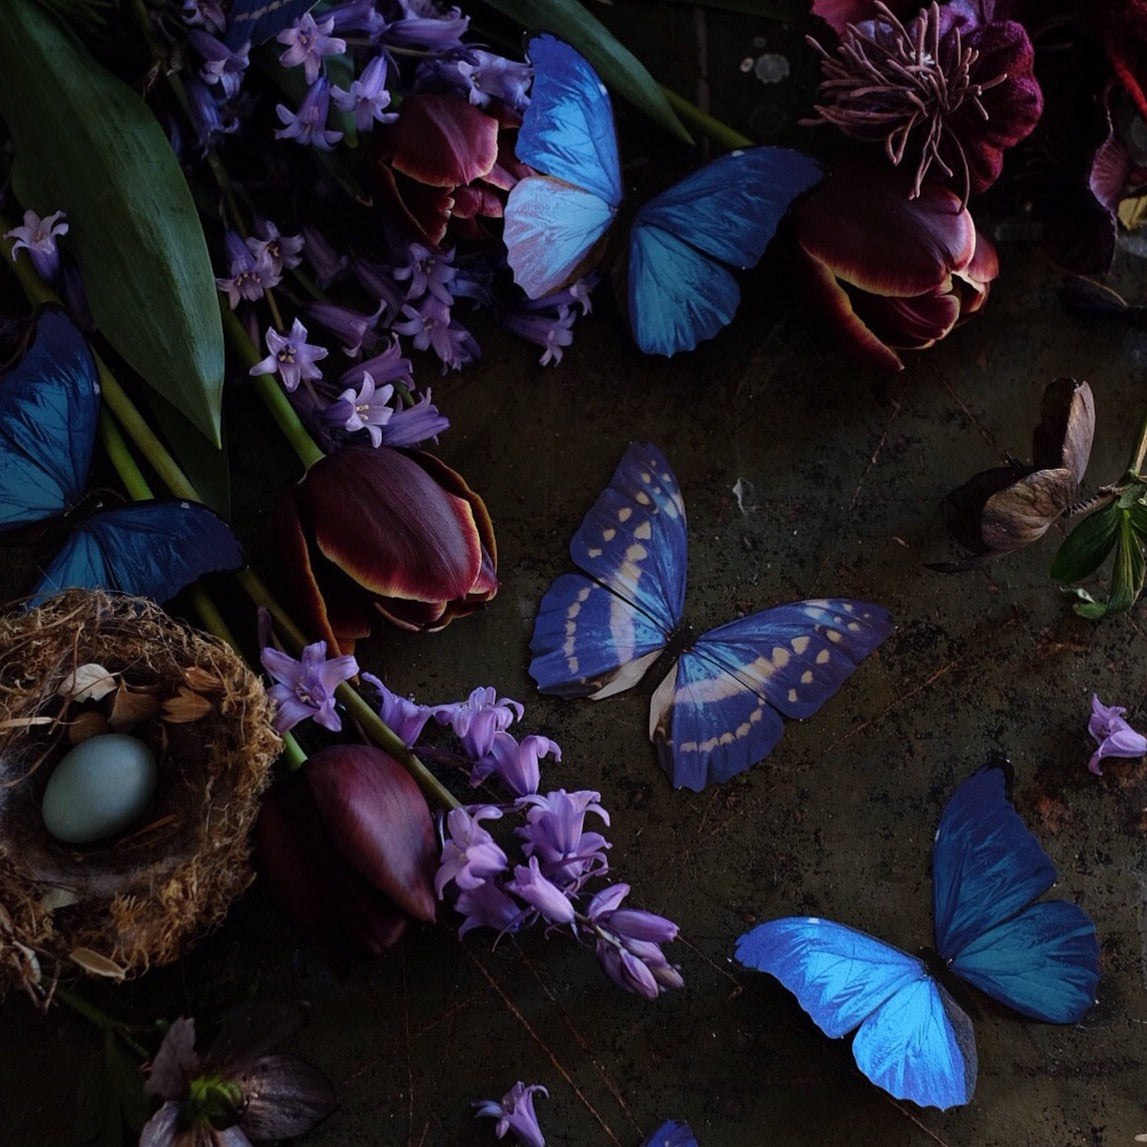 'Blue Morpho' Butterfly